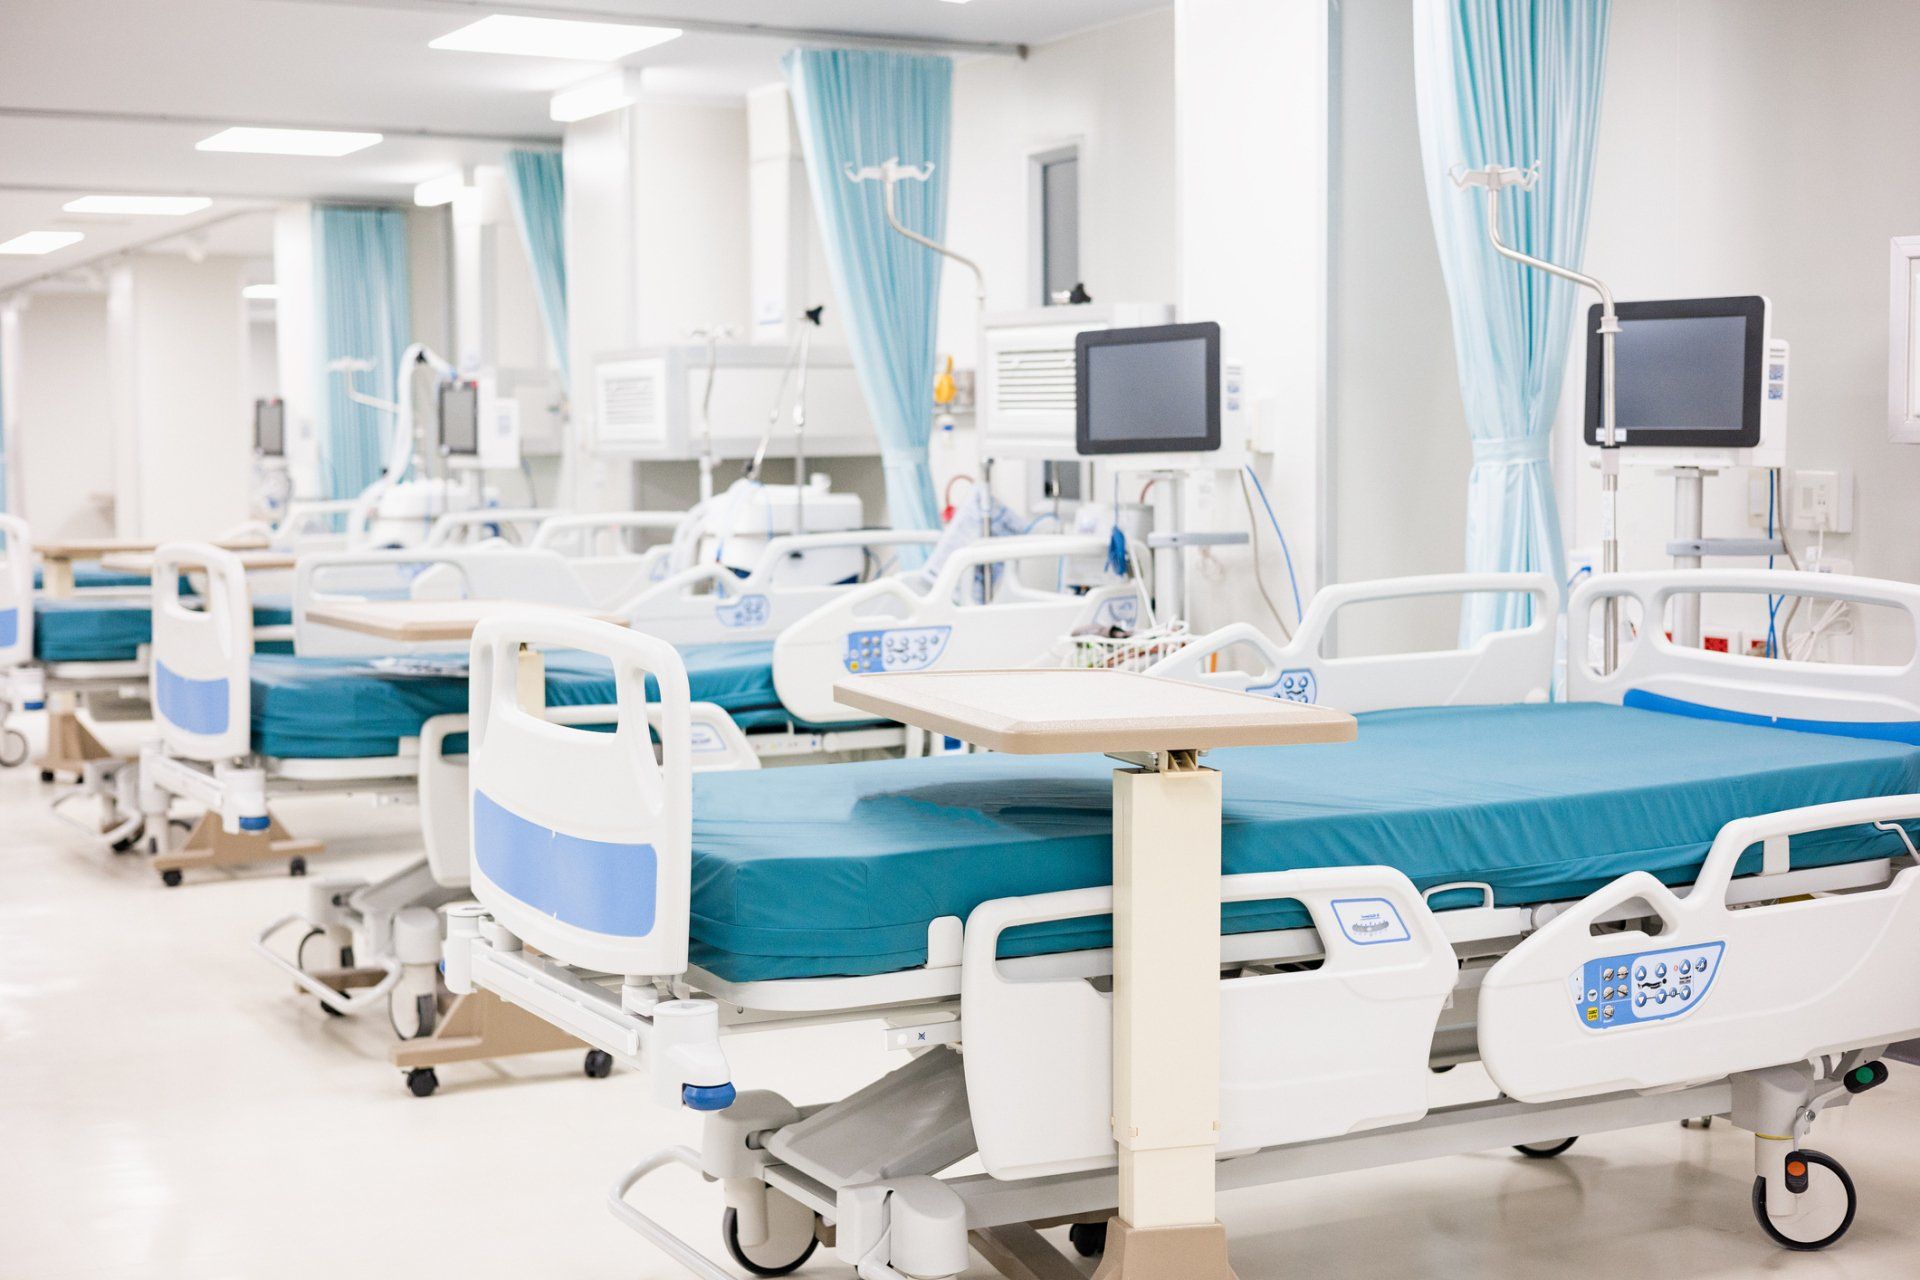 Modern Hospital Room With Ventilator System In Intensive Care Unit - Harlingen, TX - Generations Medical Equipment